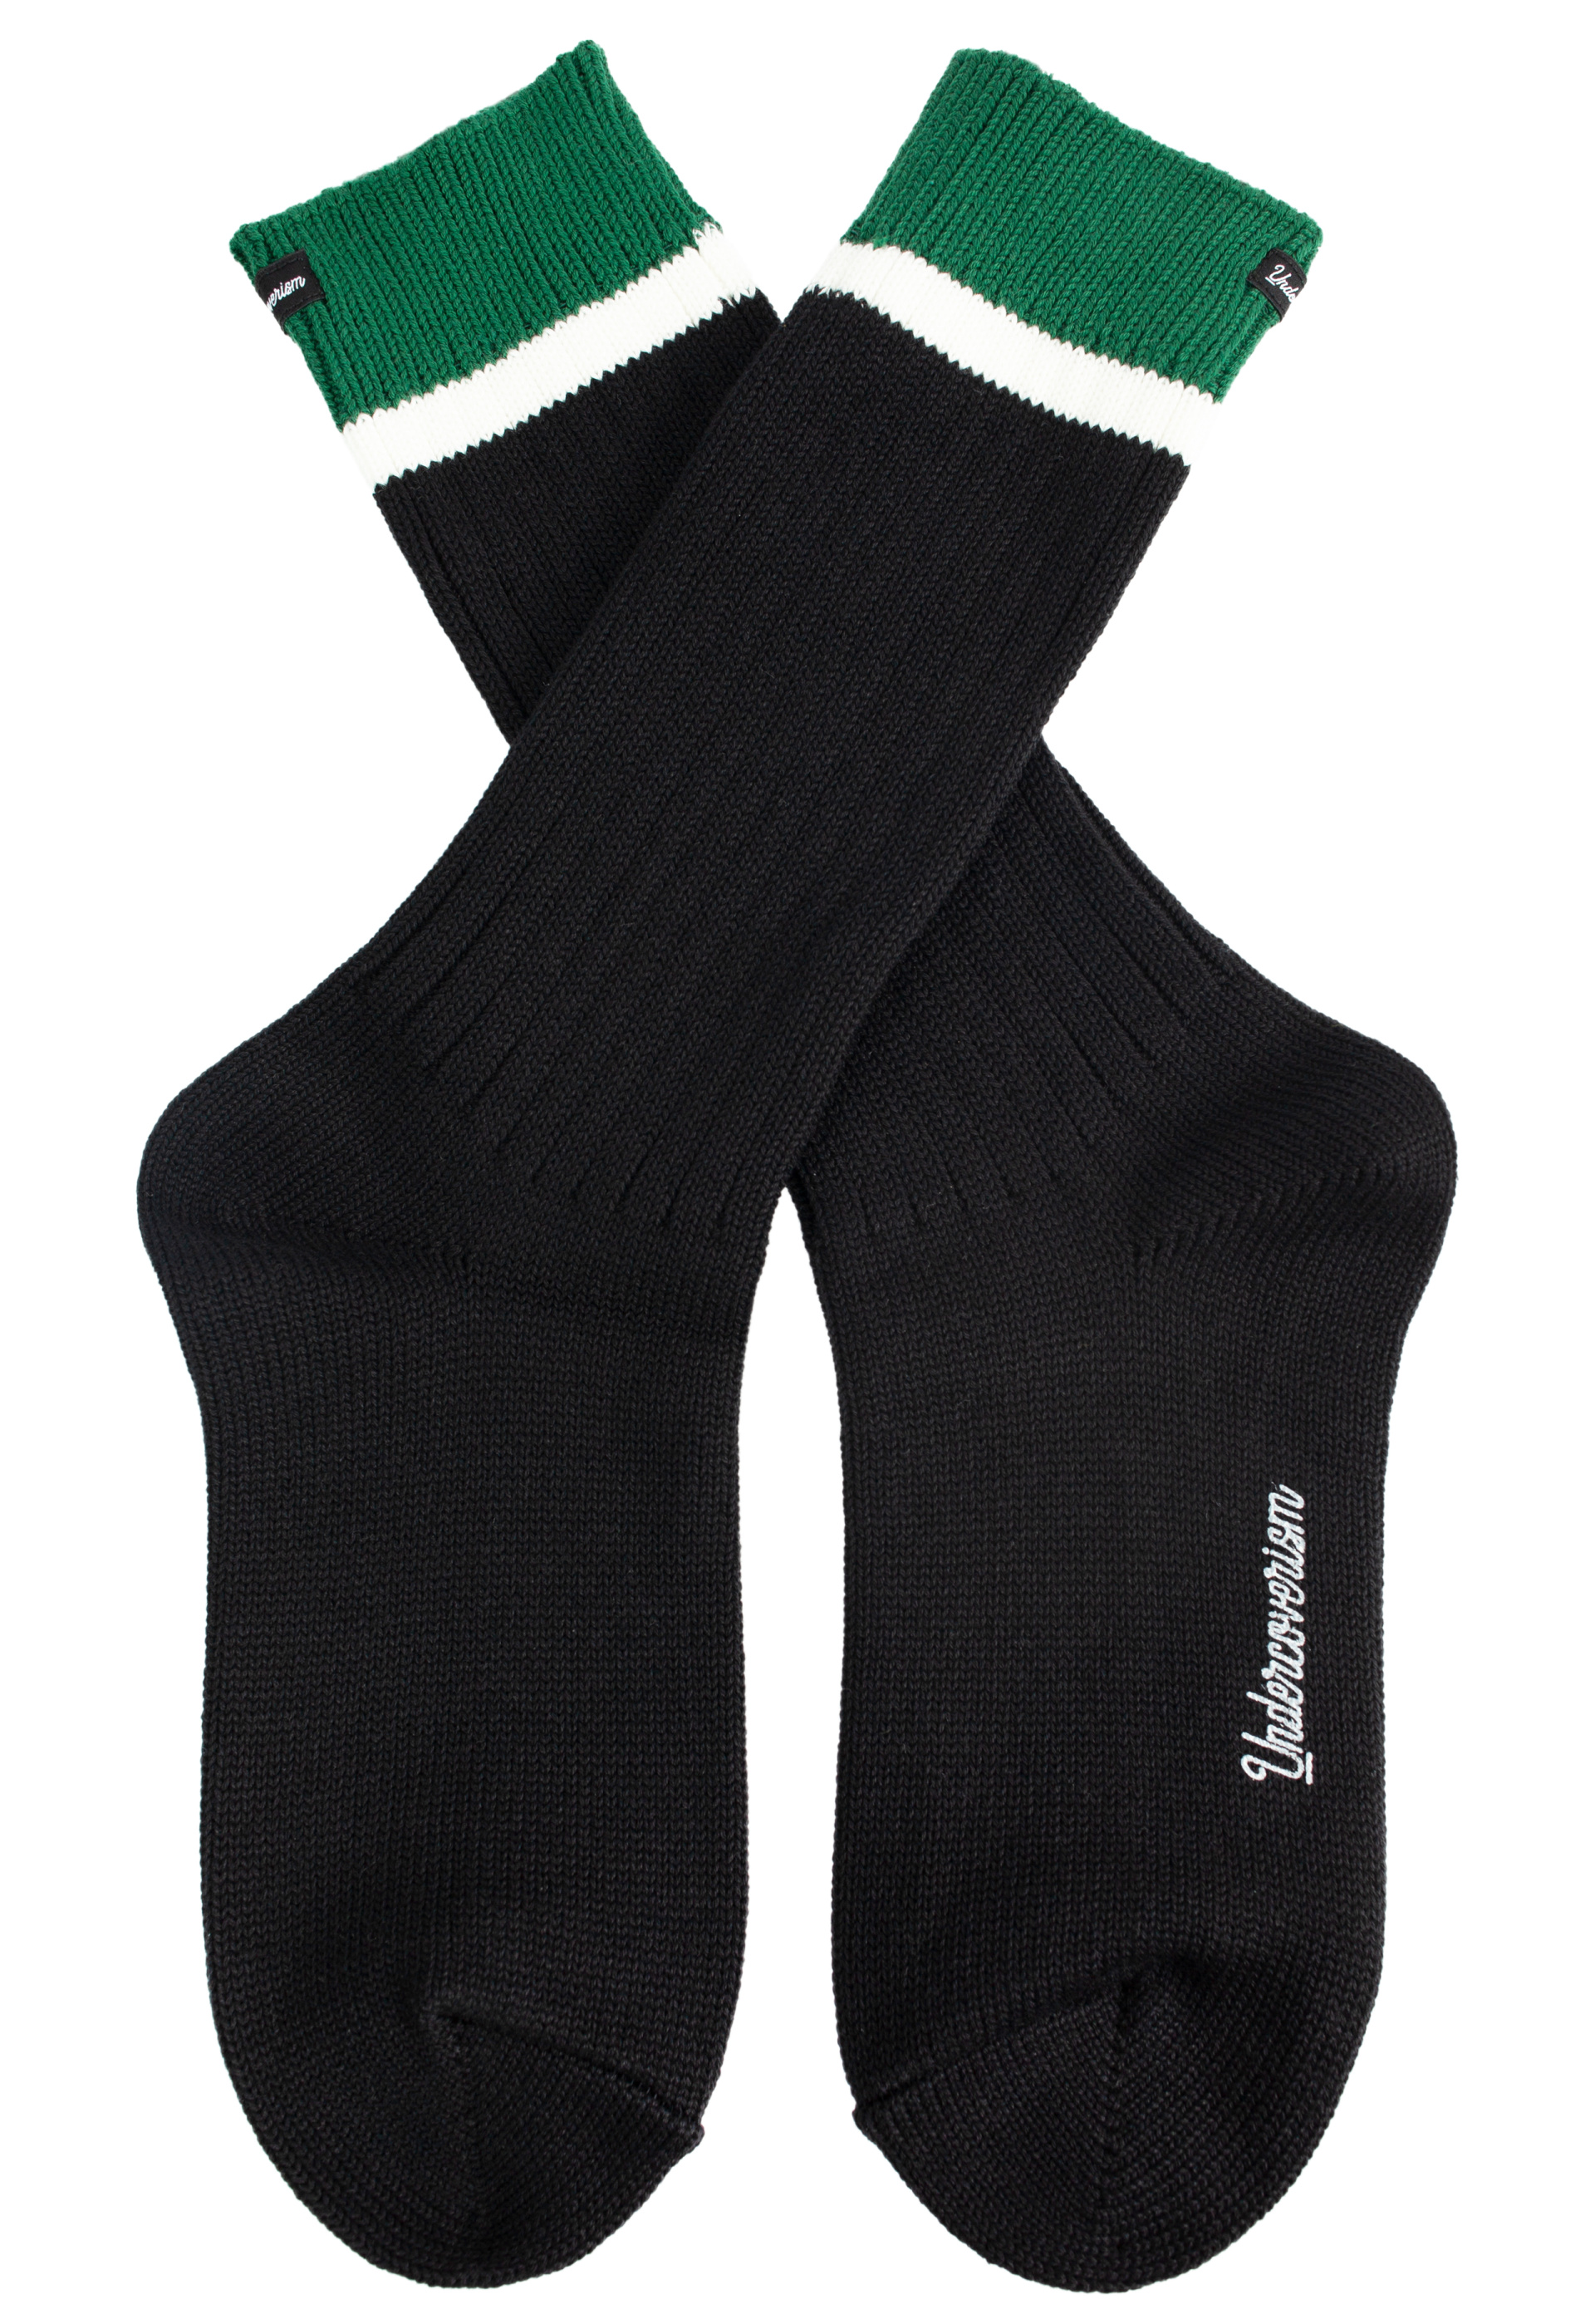 Undercover Black calf-high knit socks